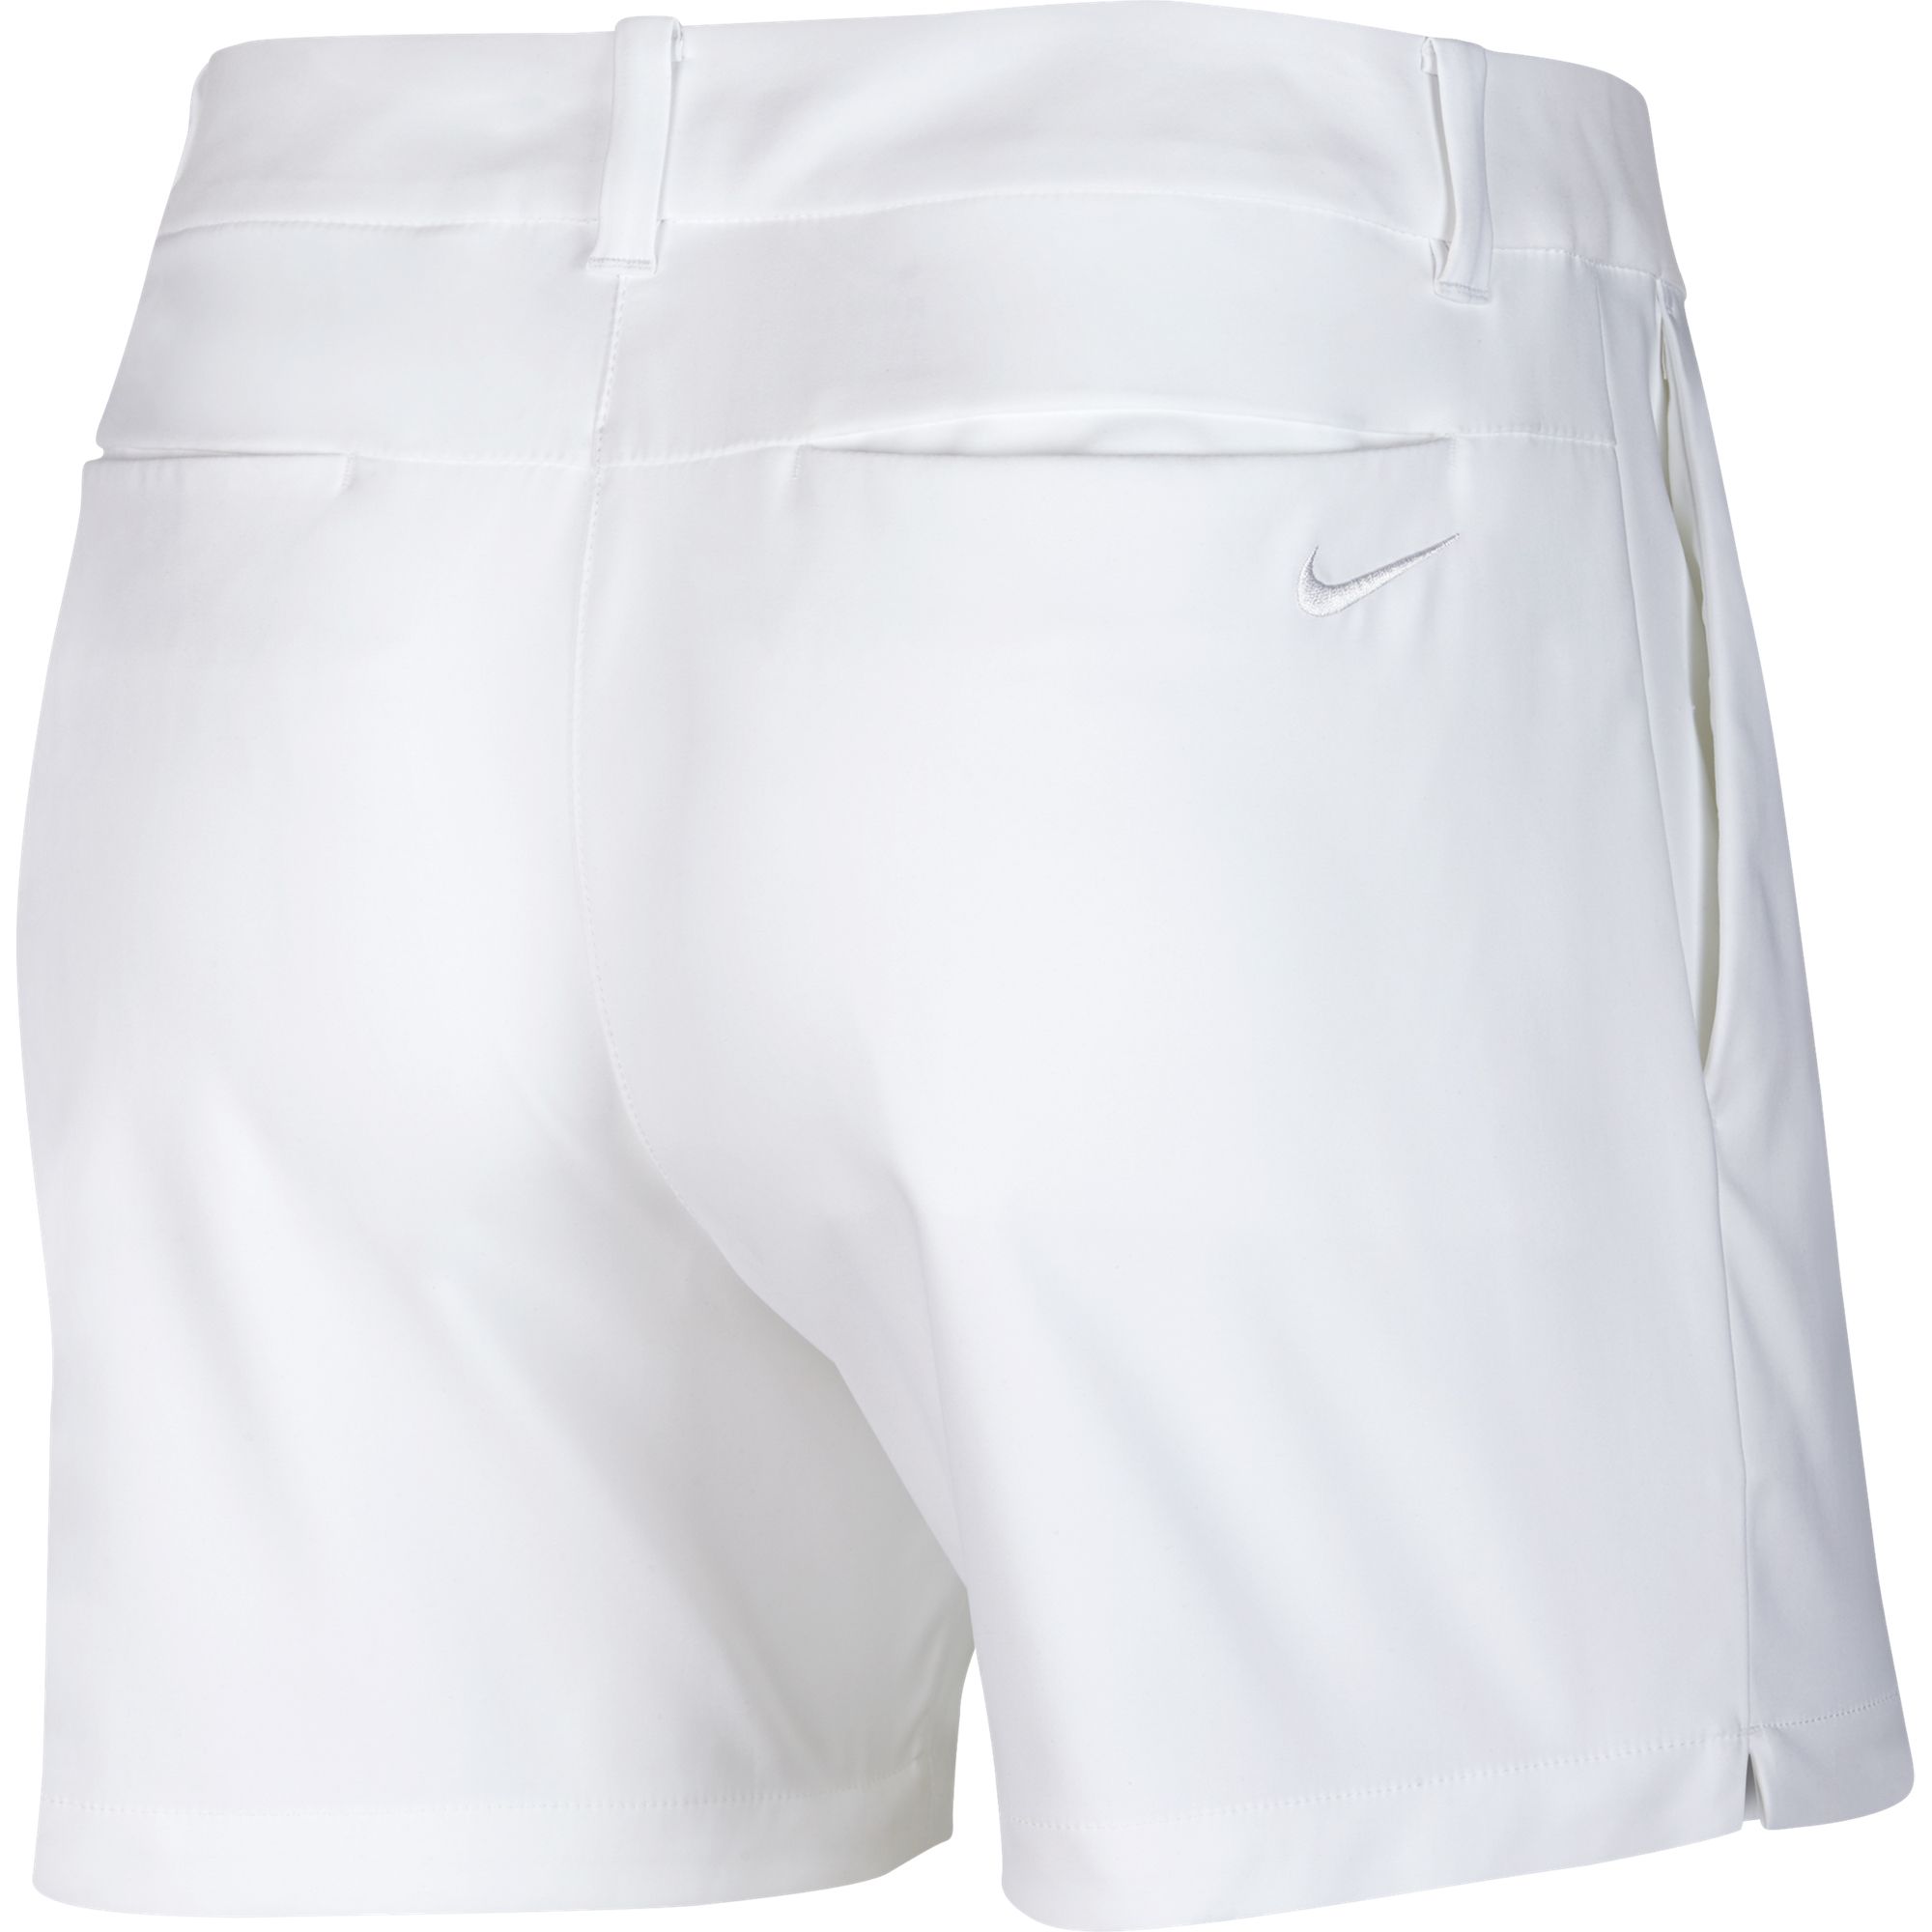 nike women's flex woven golf shorts